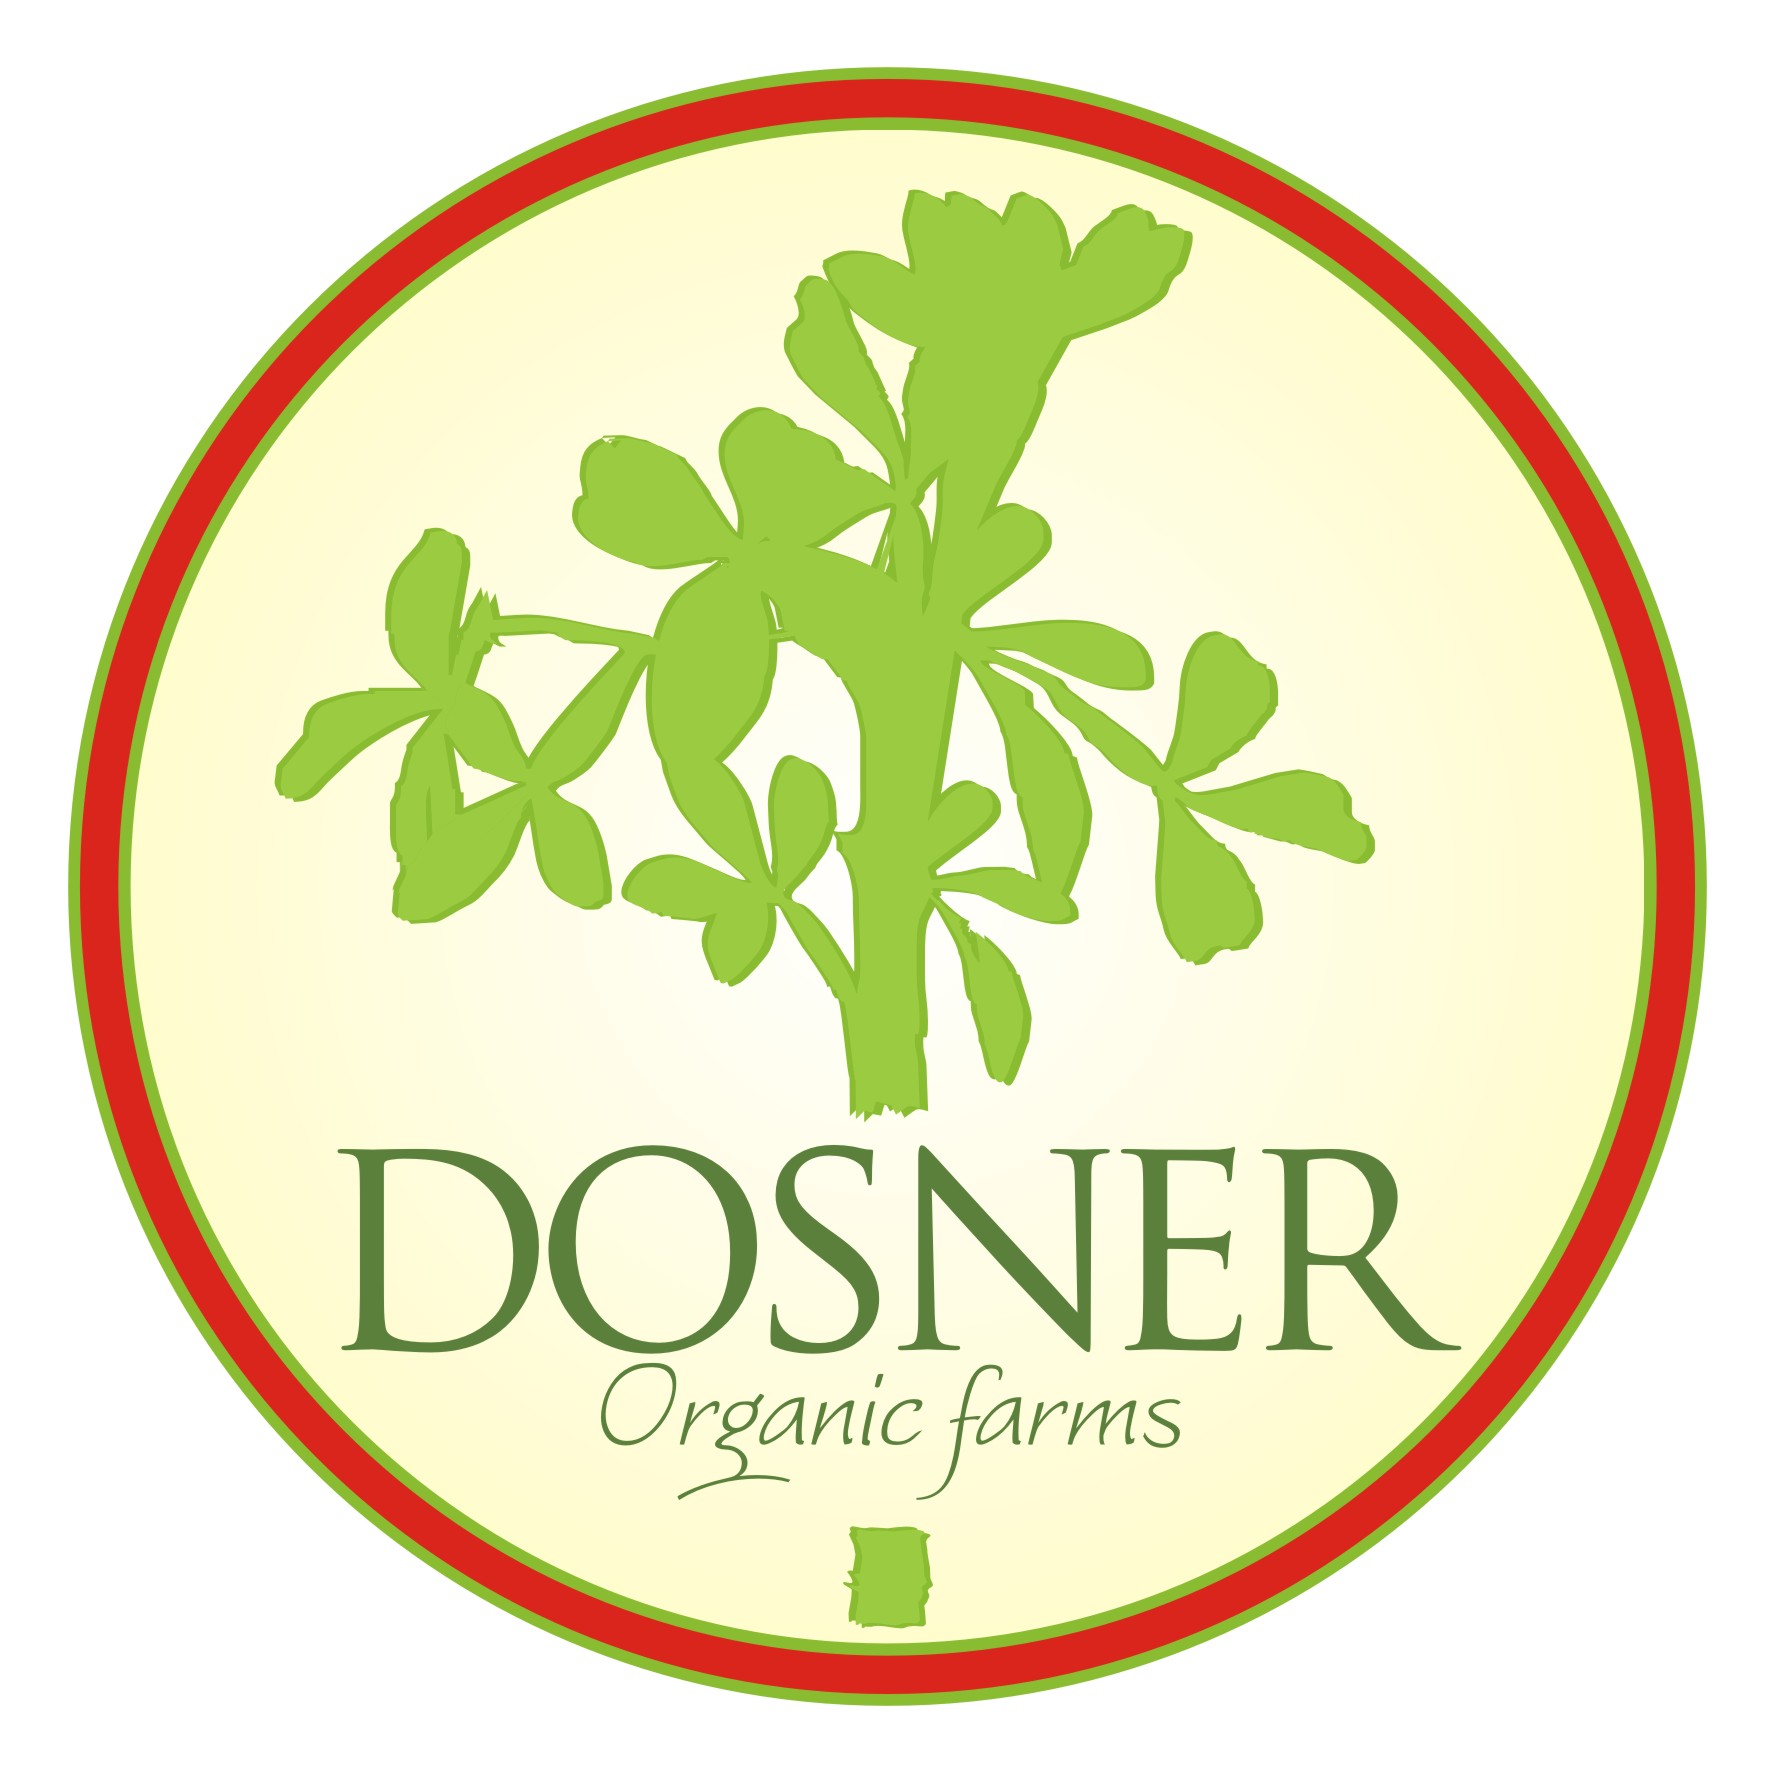 Dosner Organic Farms